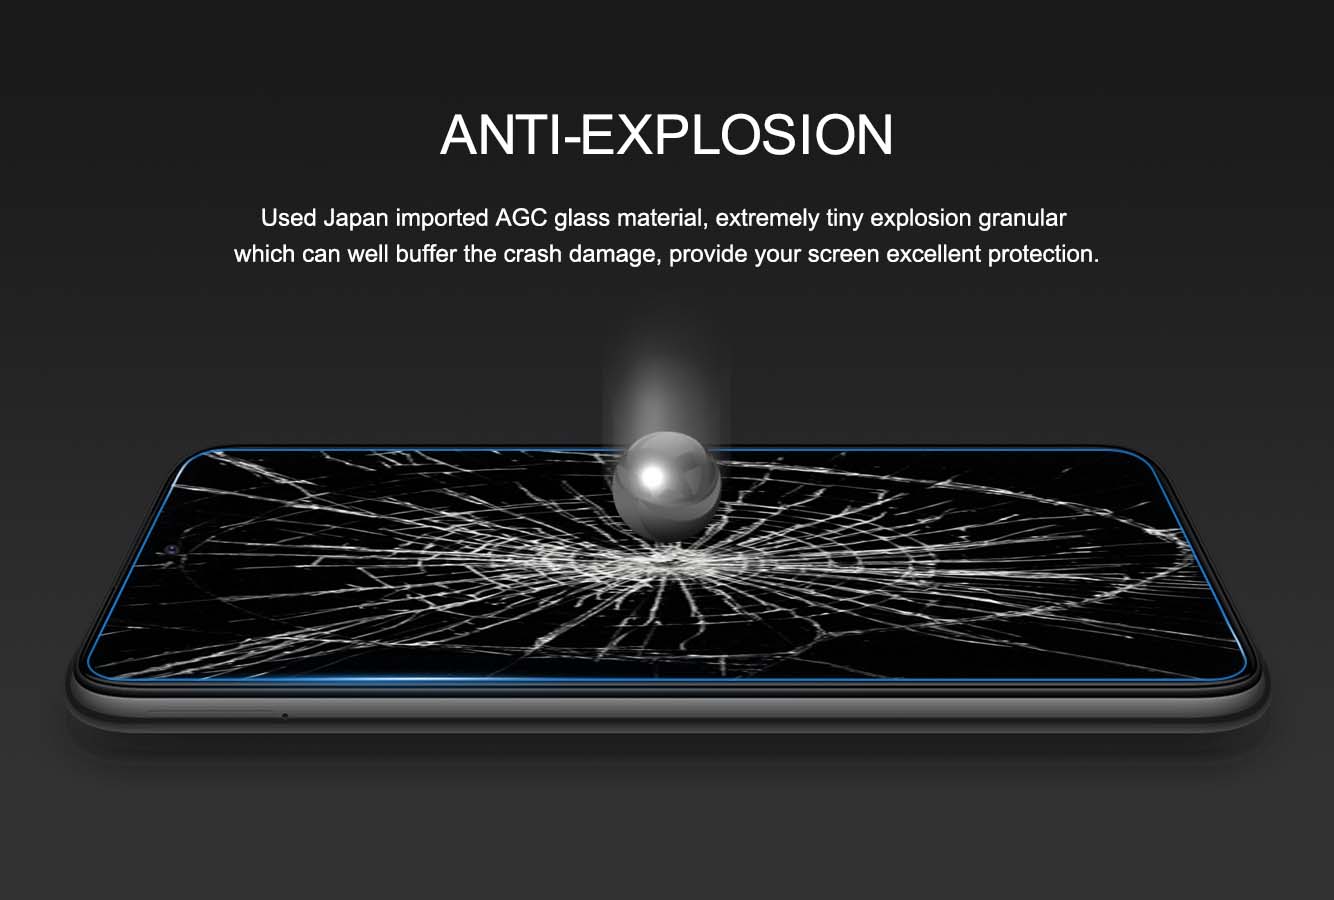 Samsung Galaxy A51 screen protector